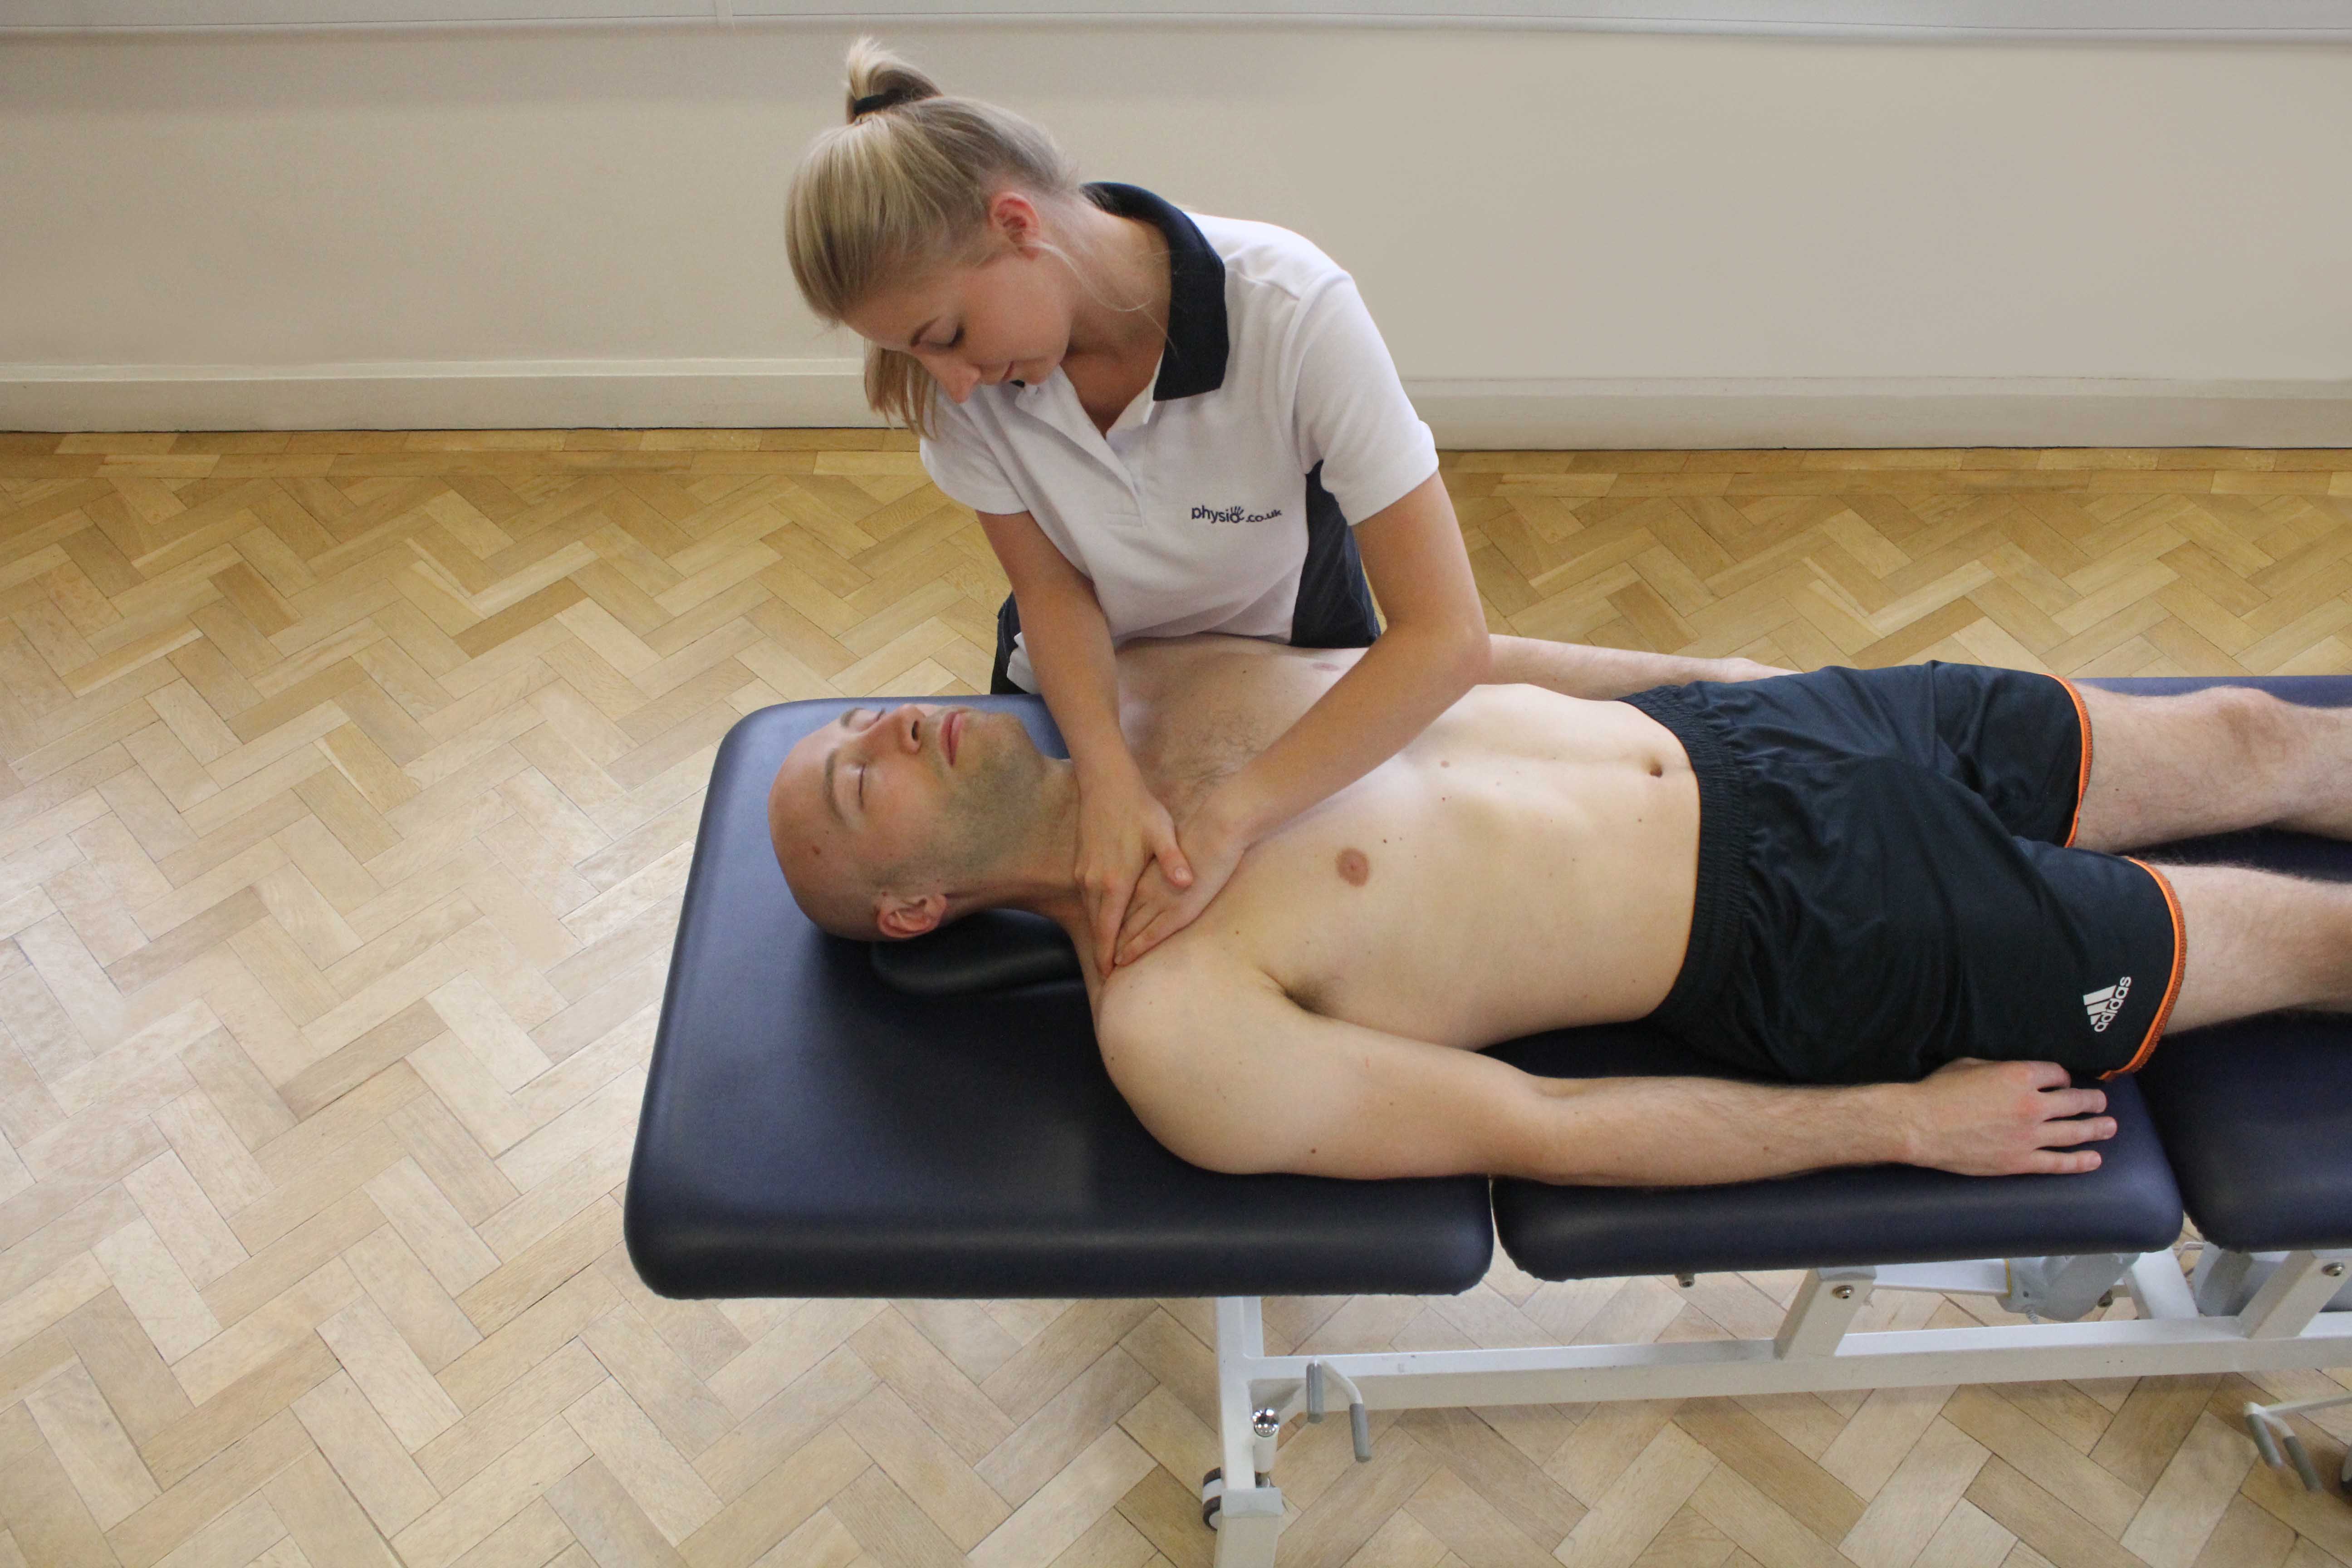 Remedial massage focused on pectoralis major and anterior deltoid